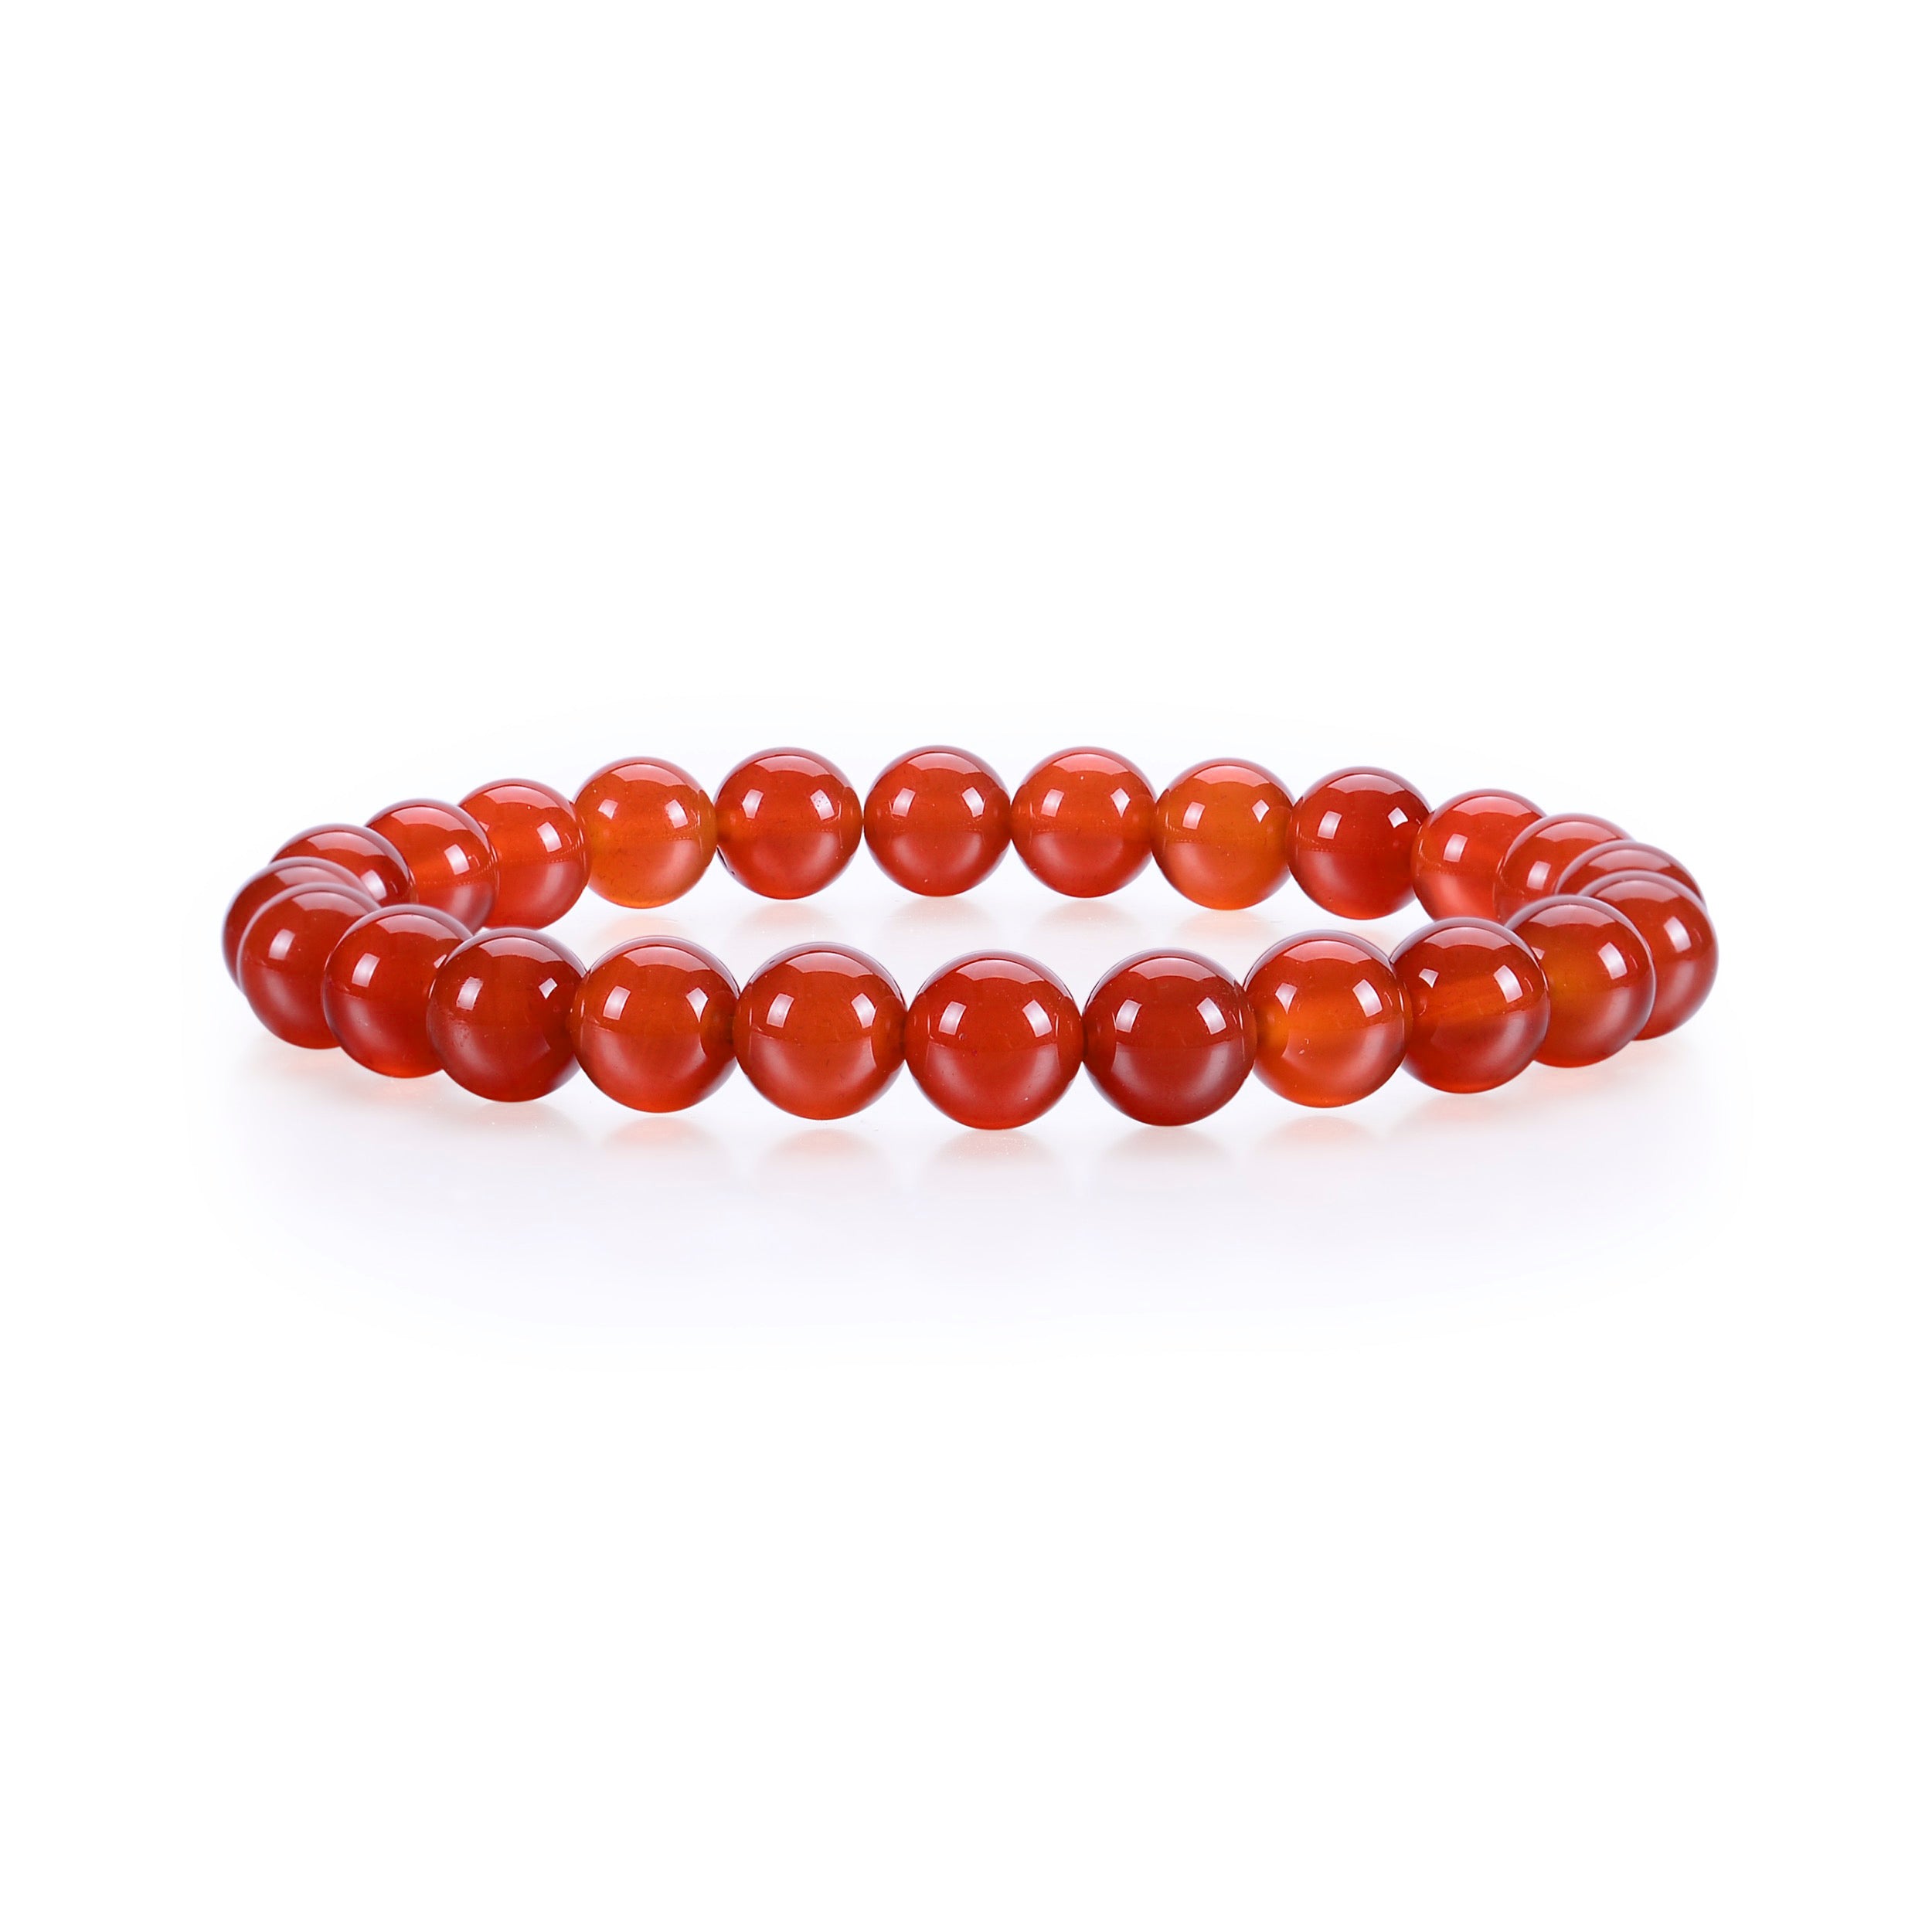 5g Green,Orange (Beads) Handmade Heart Thread Beaded Bracelet at Rs 50 in  Jamnagar